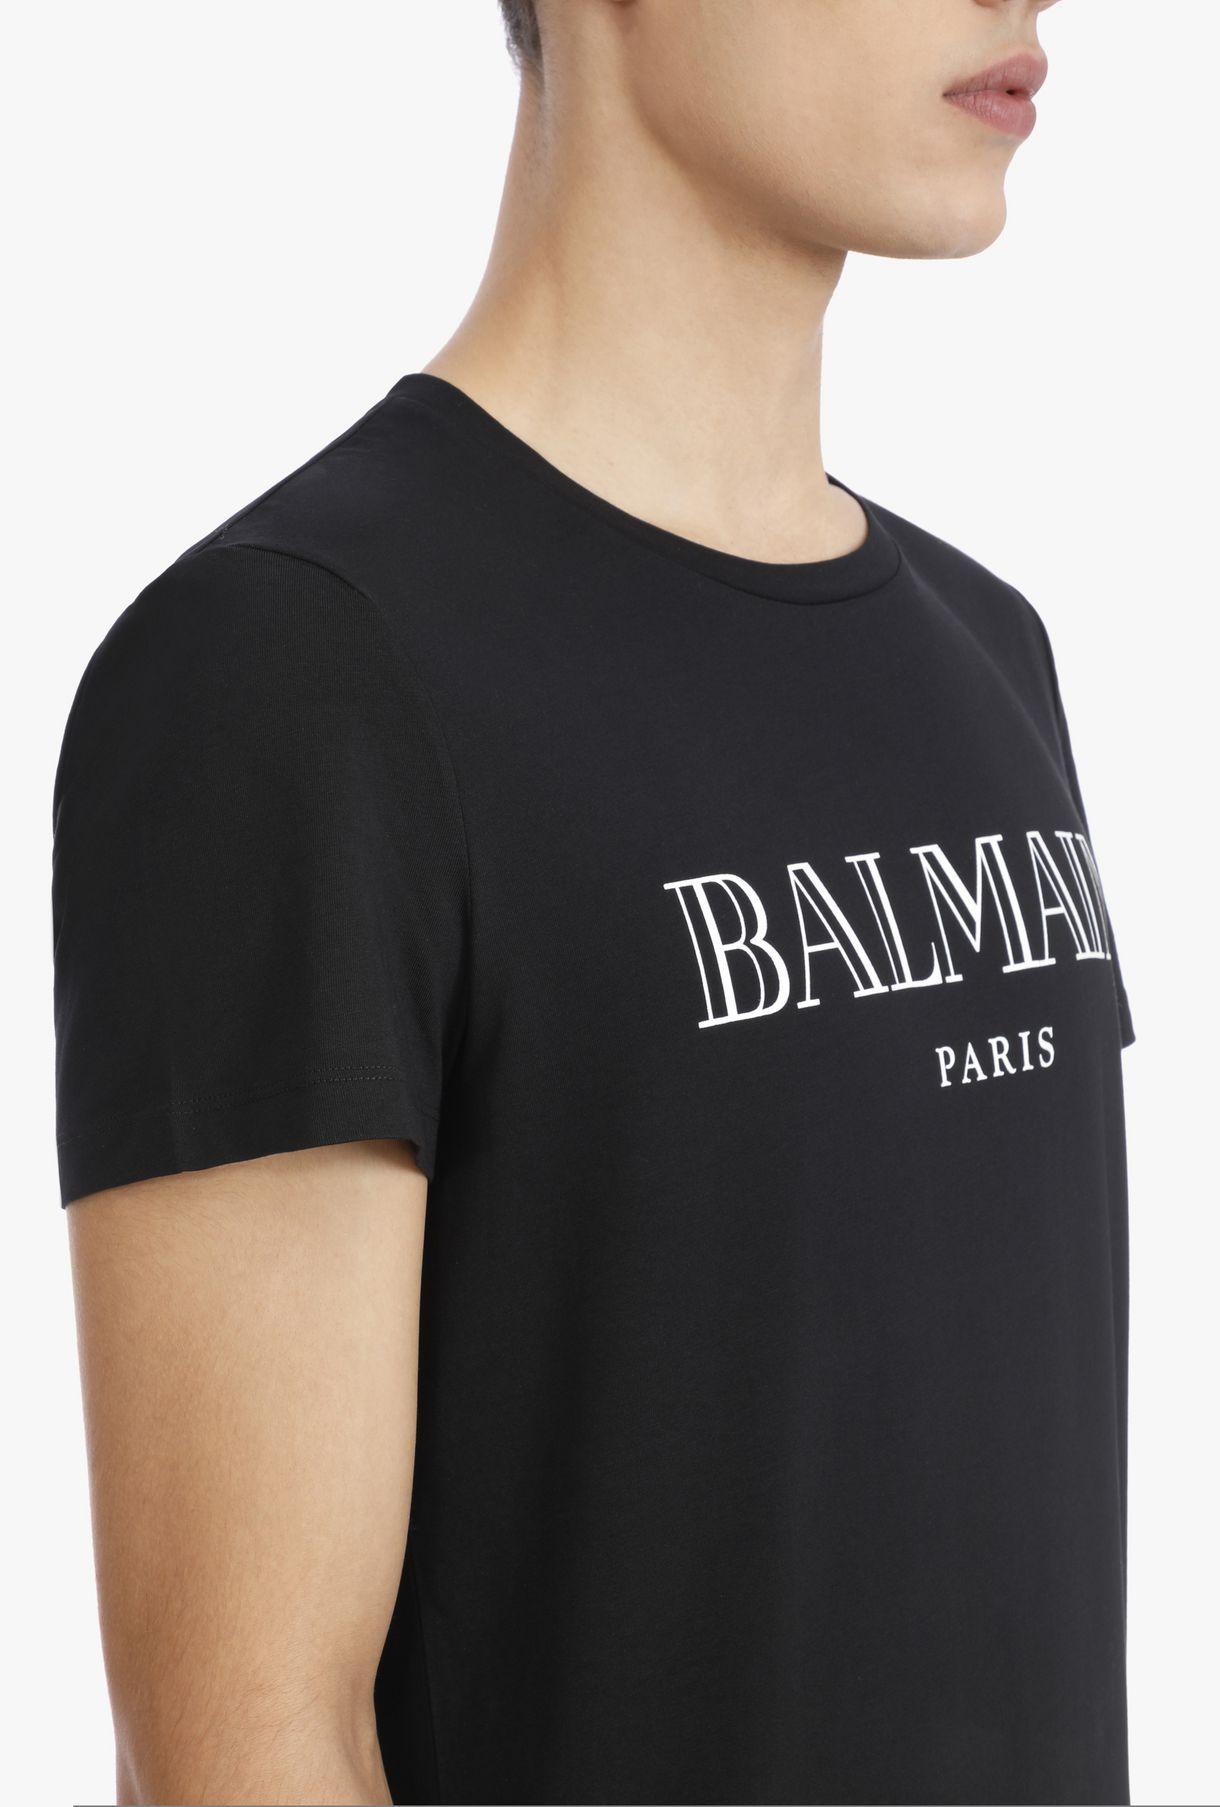 Balmain T-shirt in Black for Men - Lyst